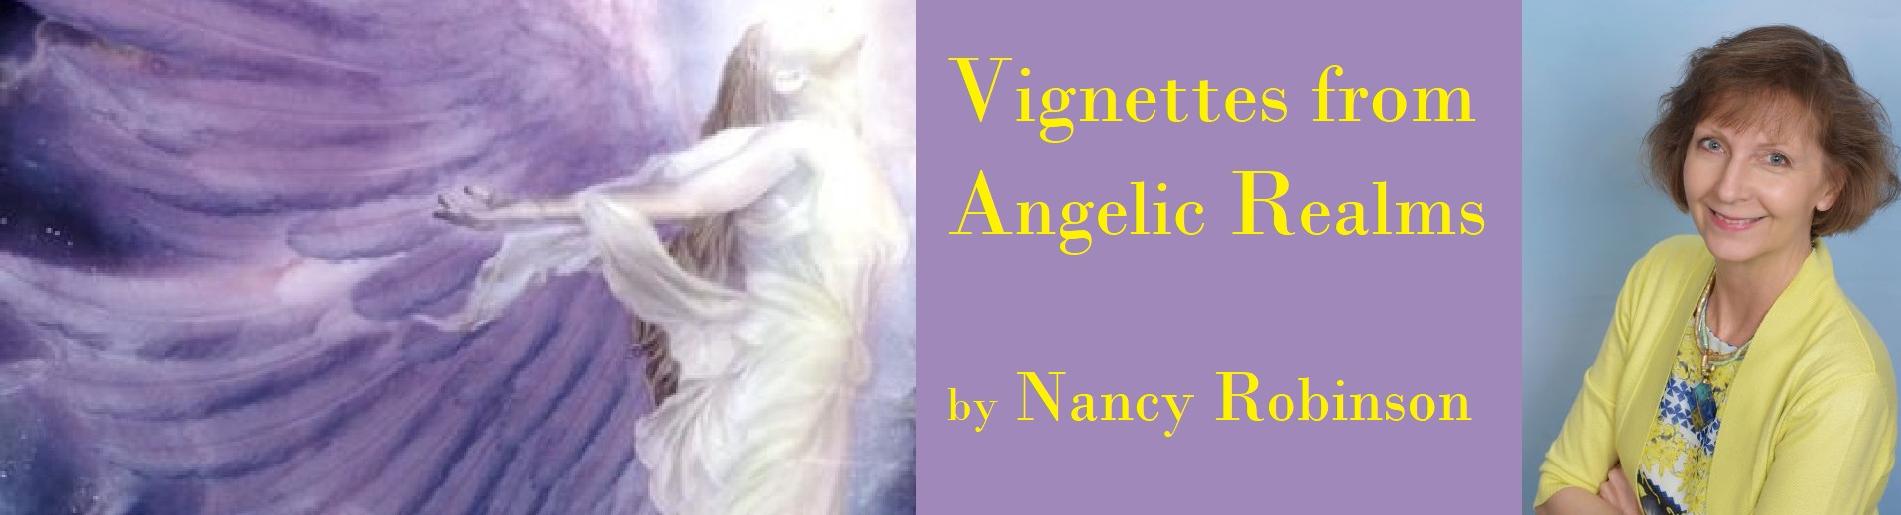 Vignettes from Angelic Realms by Nancy Robinson, Elicor Awakenings, Cosmic Wisdom - HoustonSpirituality.com